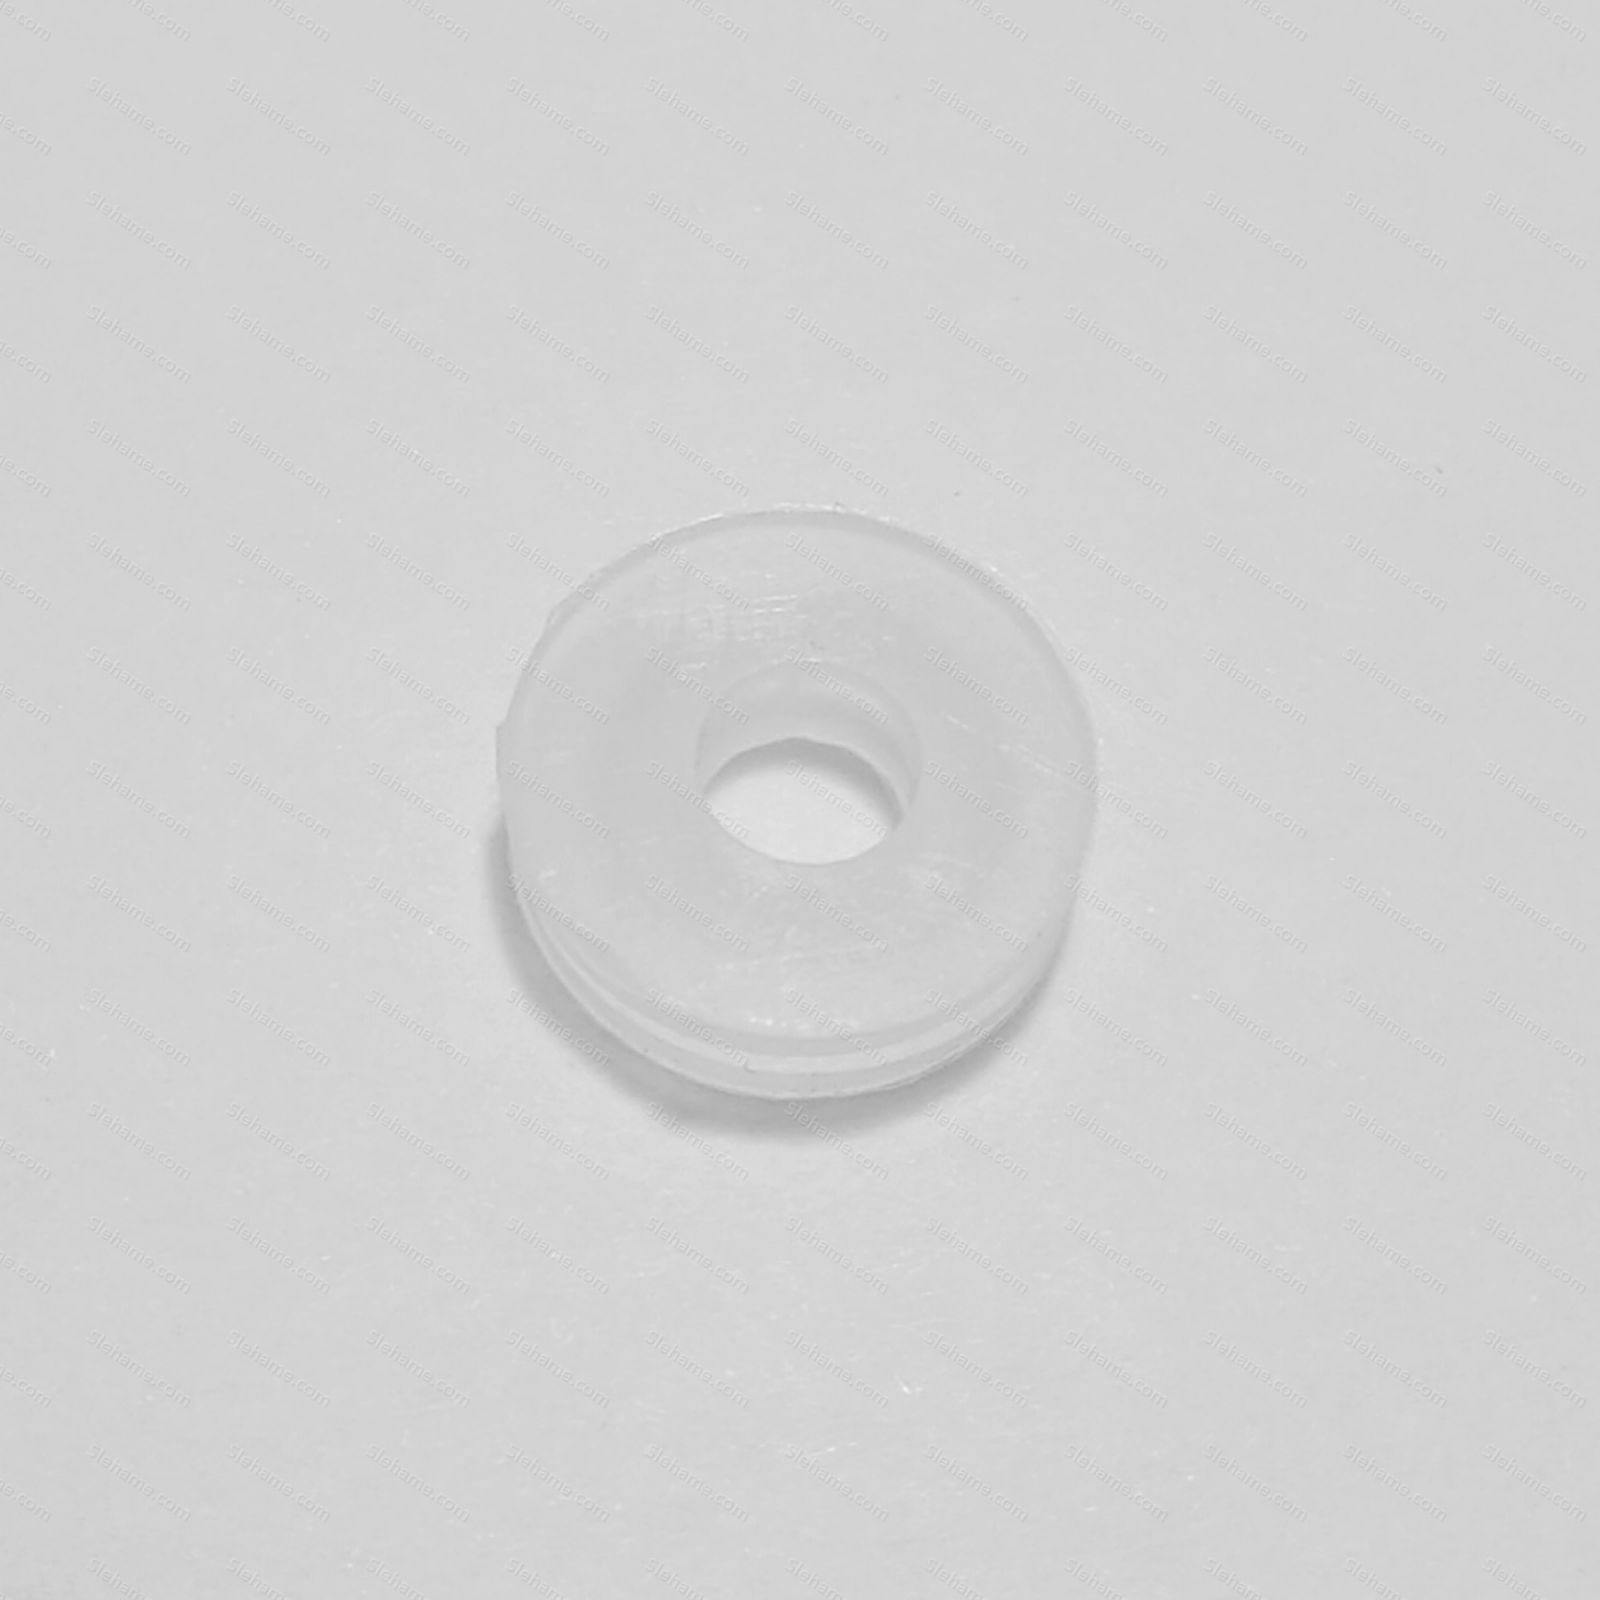 Seal of the working valve Tescoma PRESTO